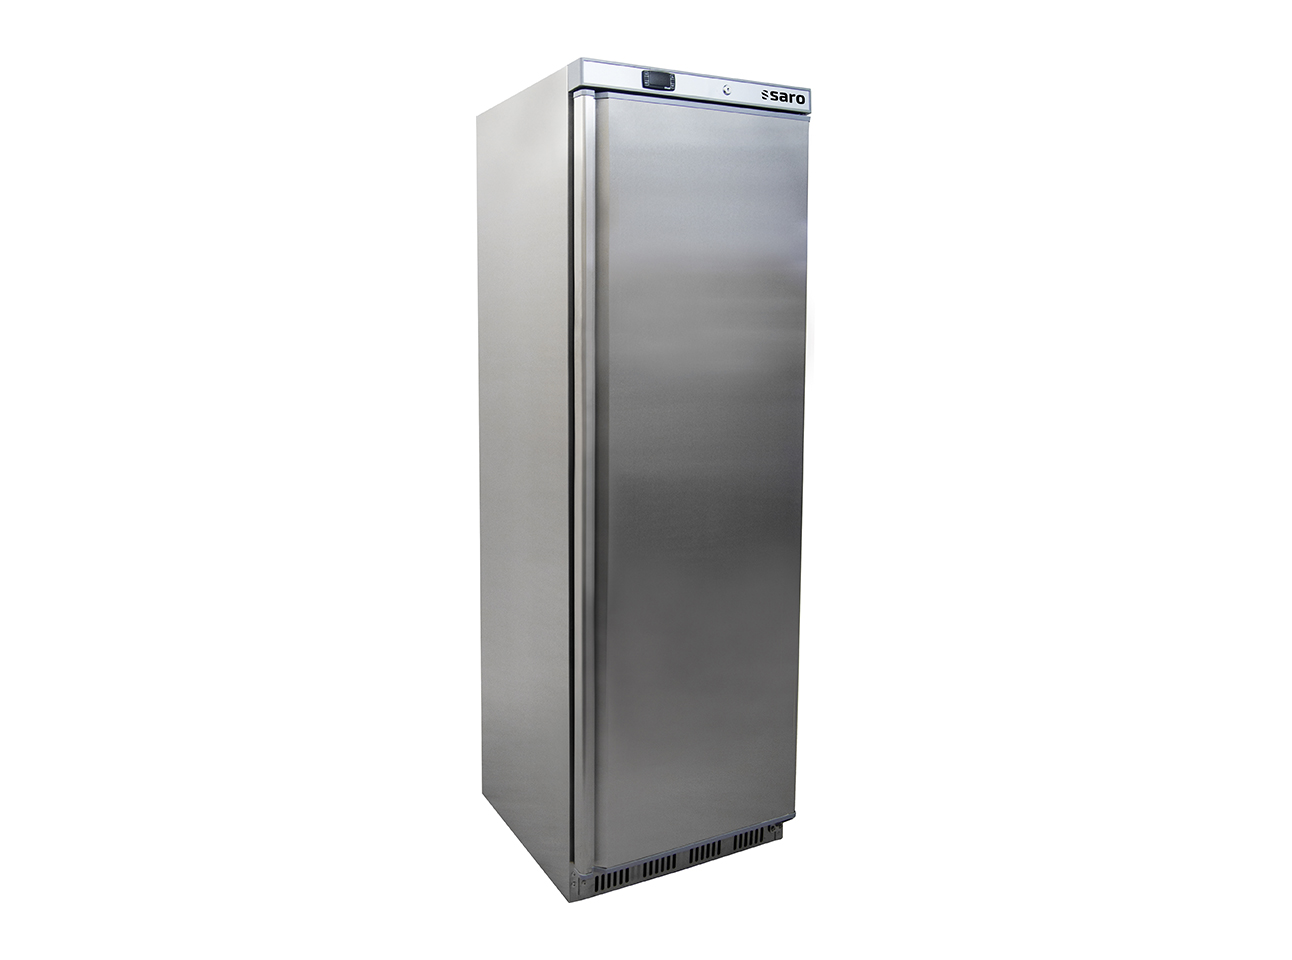 Lagertiefkühlschrank - Edelstahl HT 400 S/S